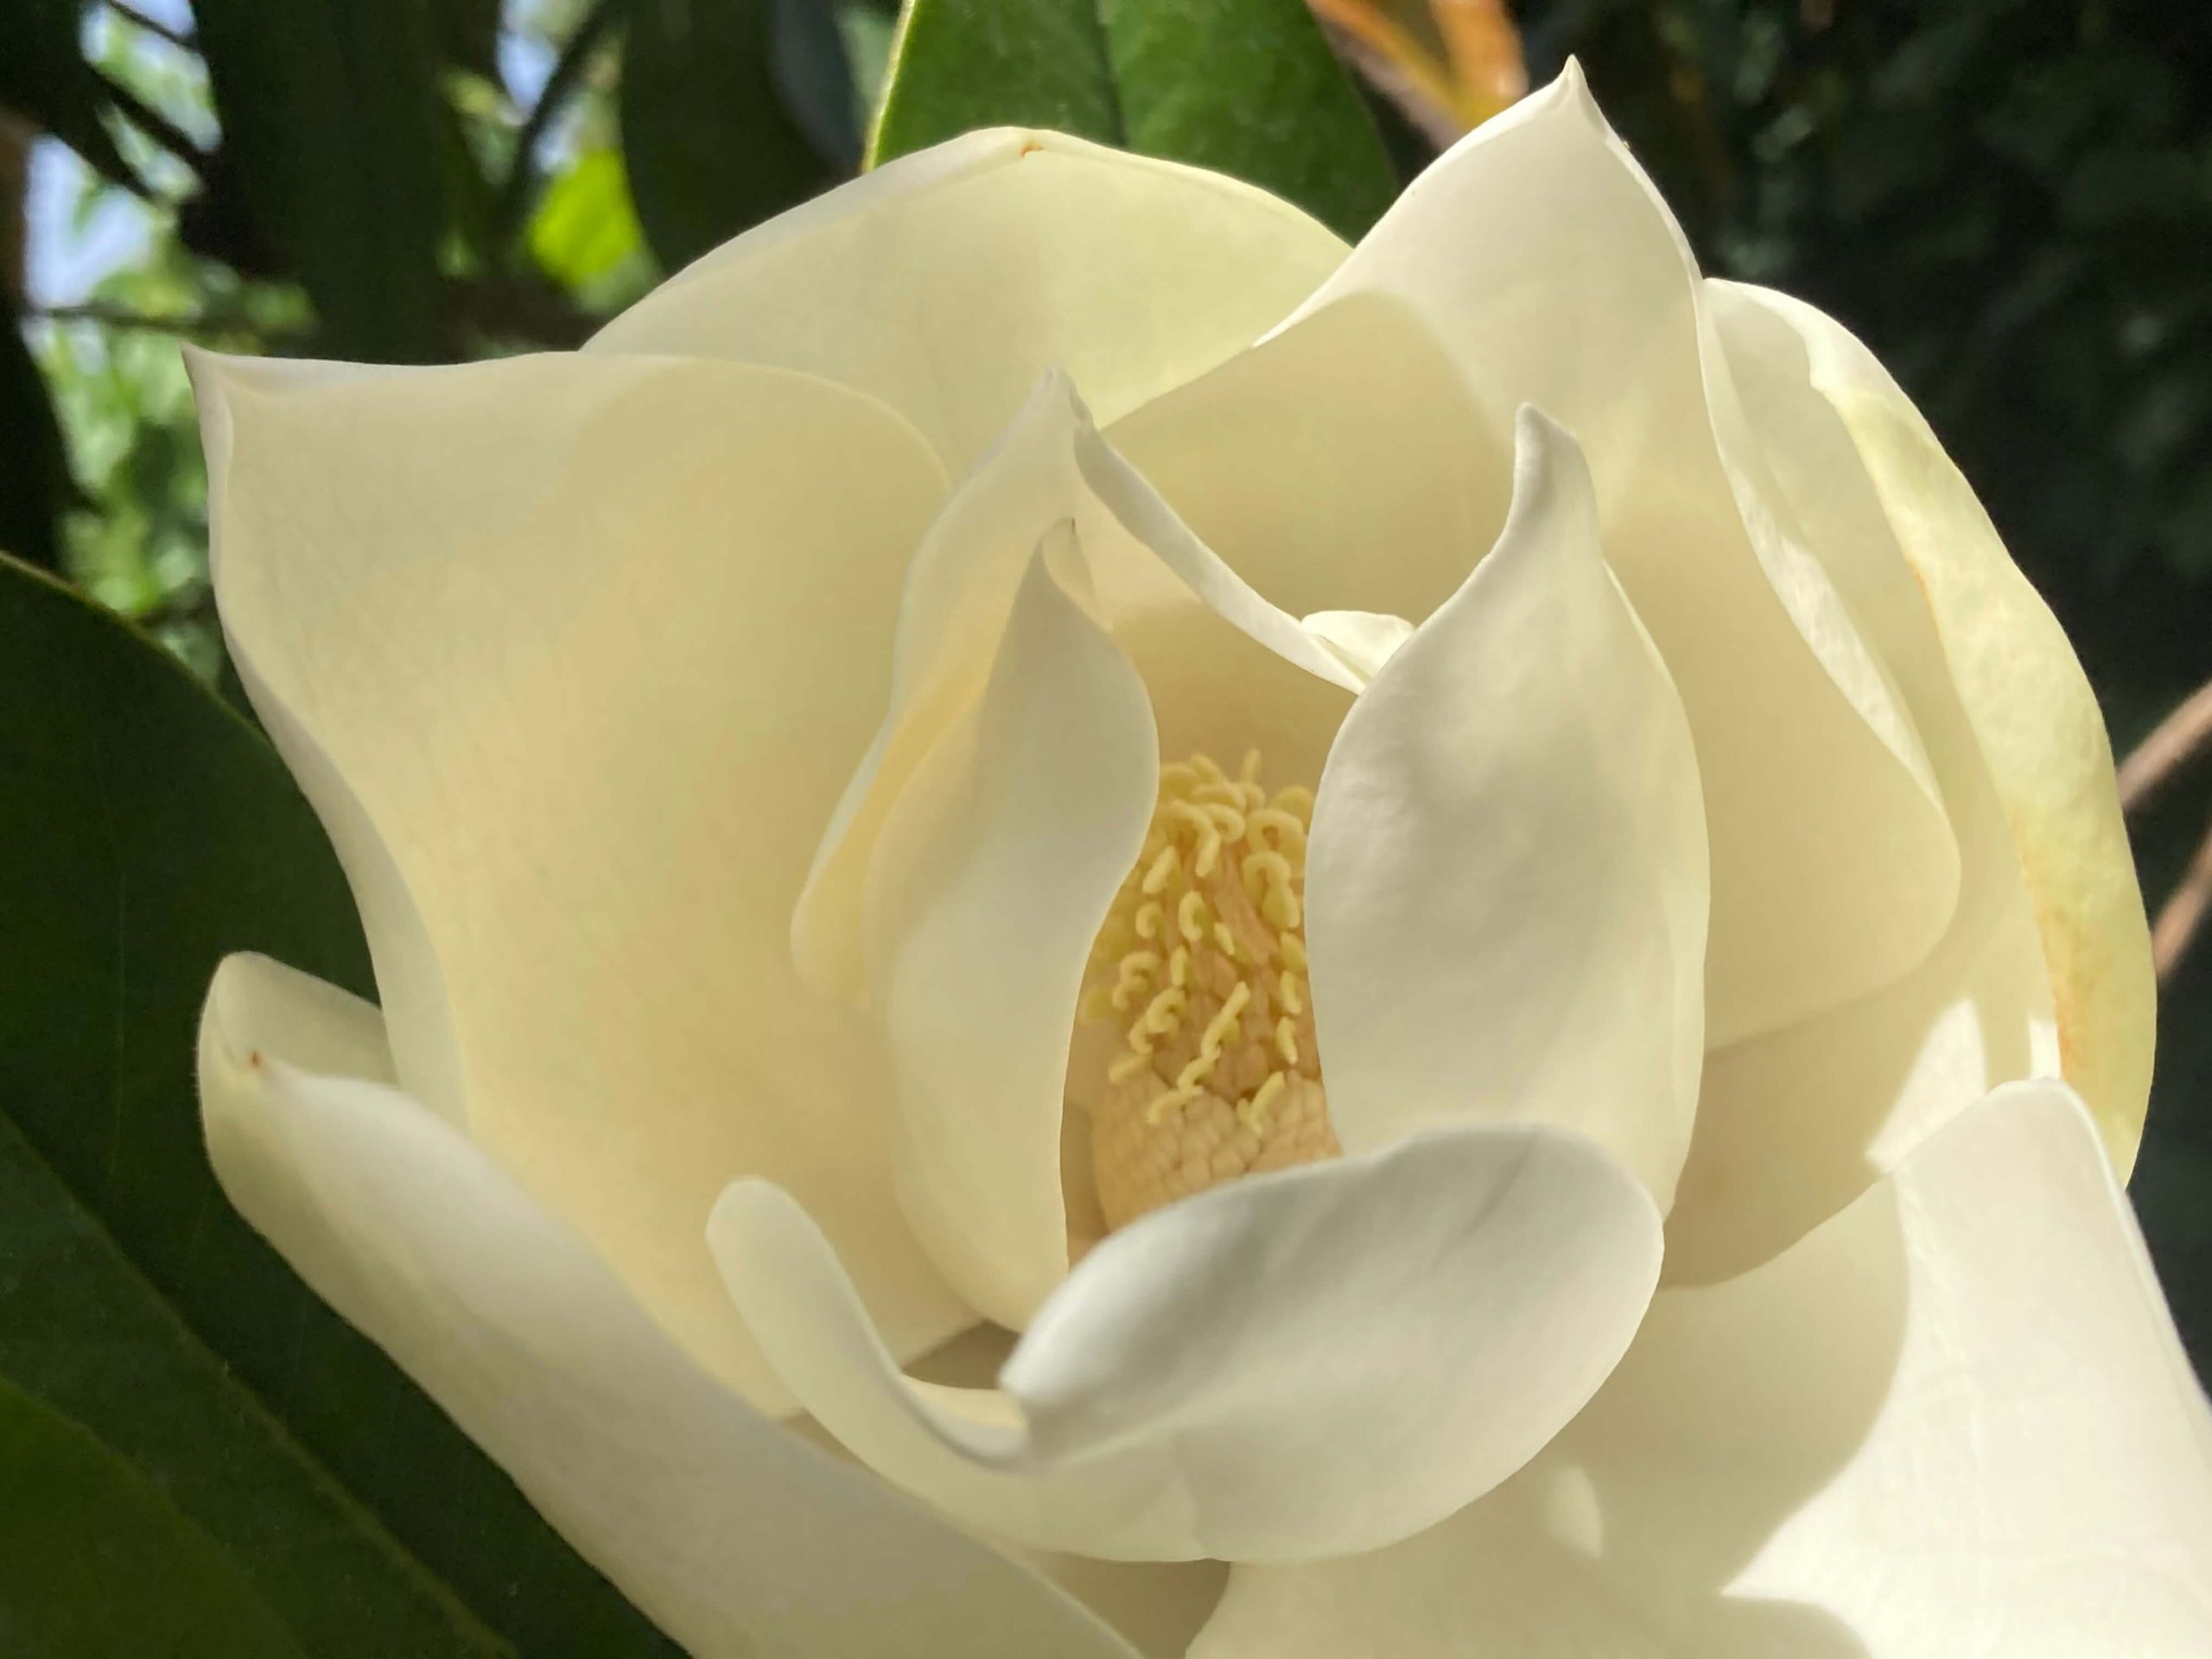 La magnoliaBotánica total